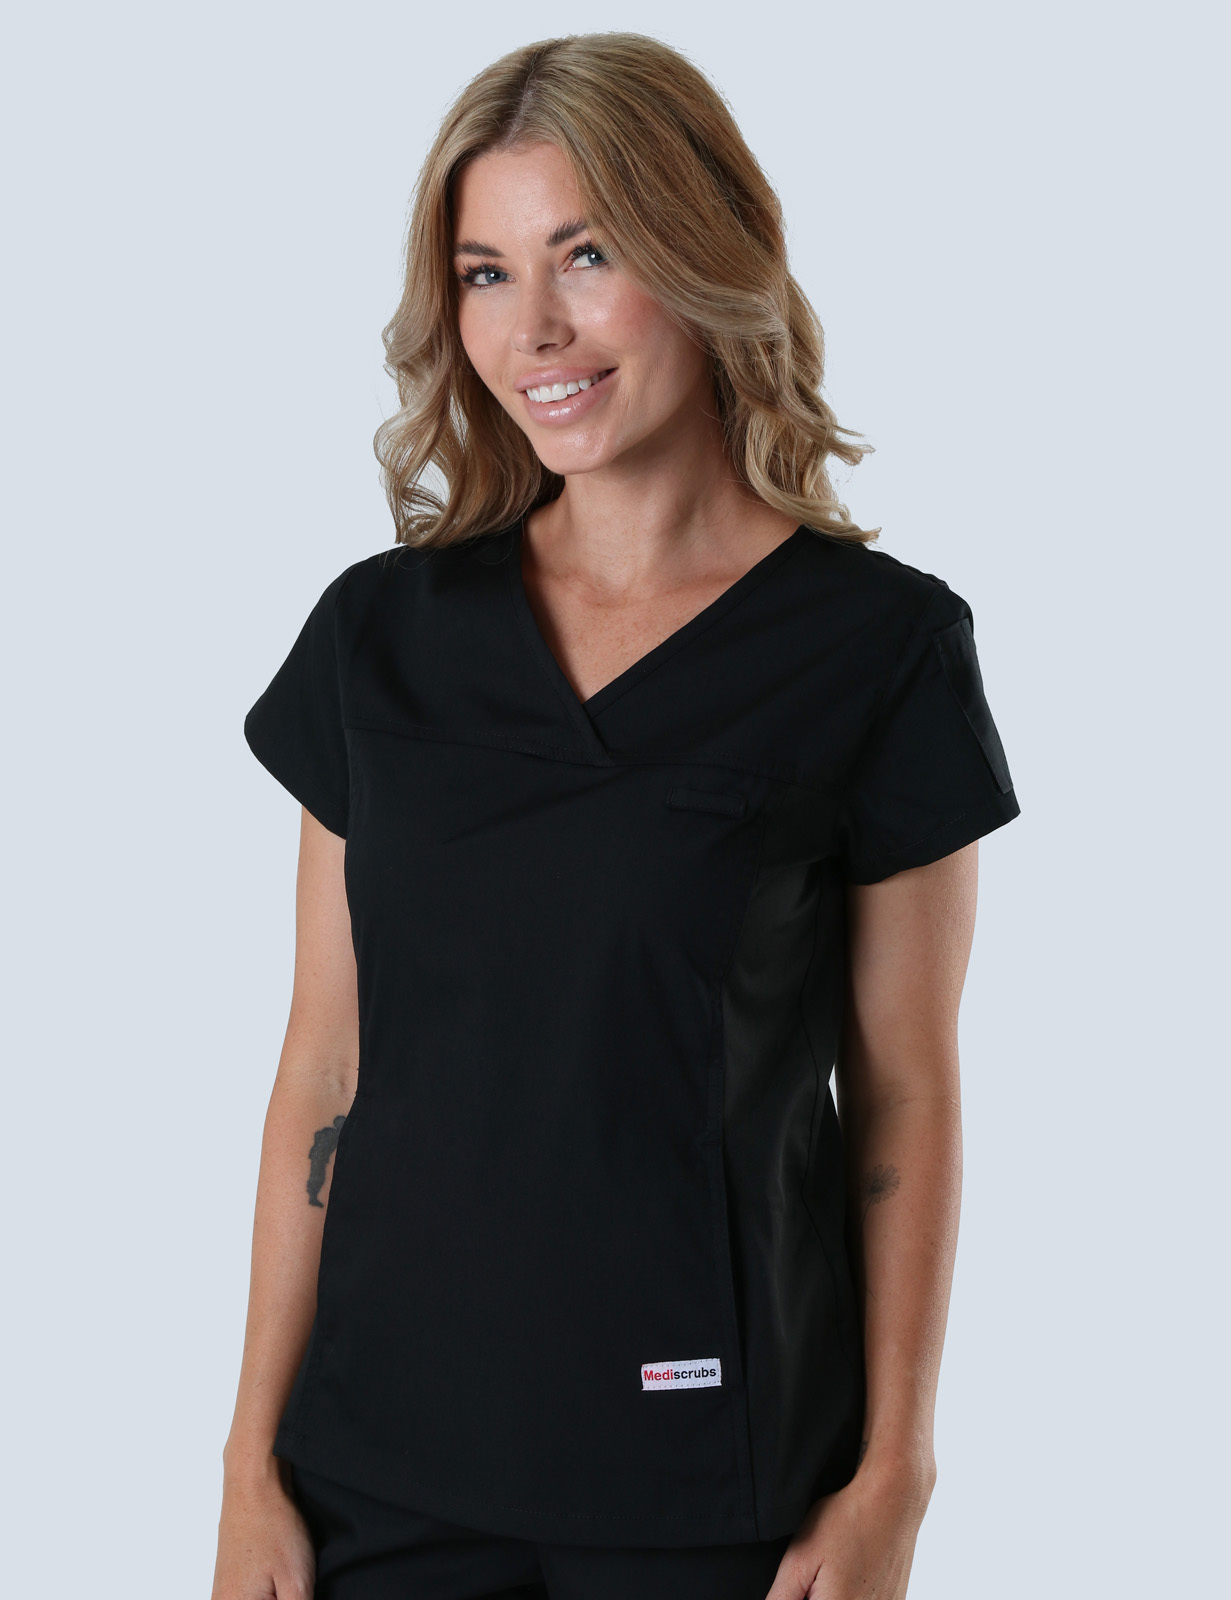 Logan Hospital - MI Radiographer (Women's Fit Spandex Scrub Top in Black incl Logos)